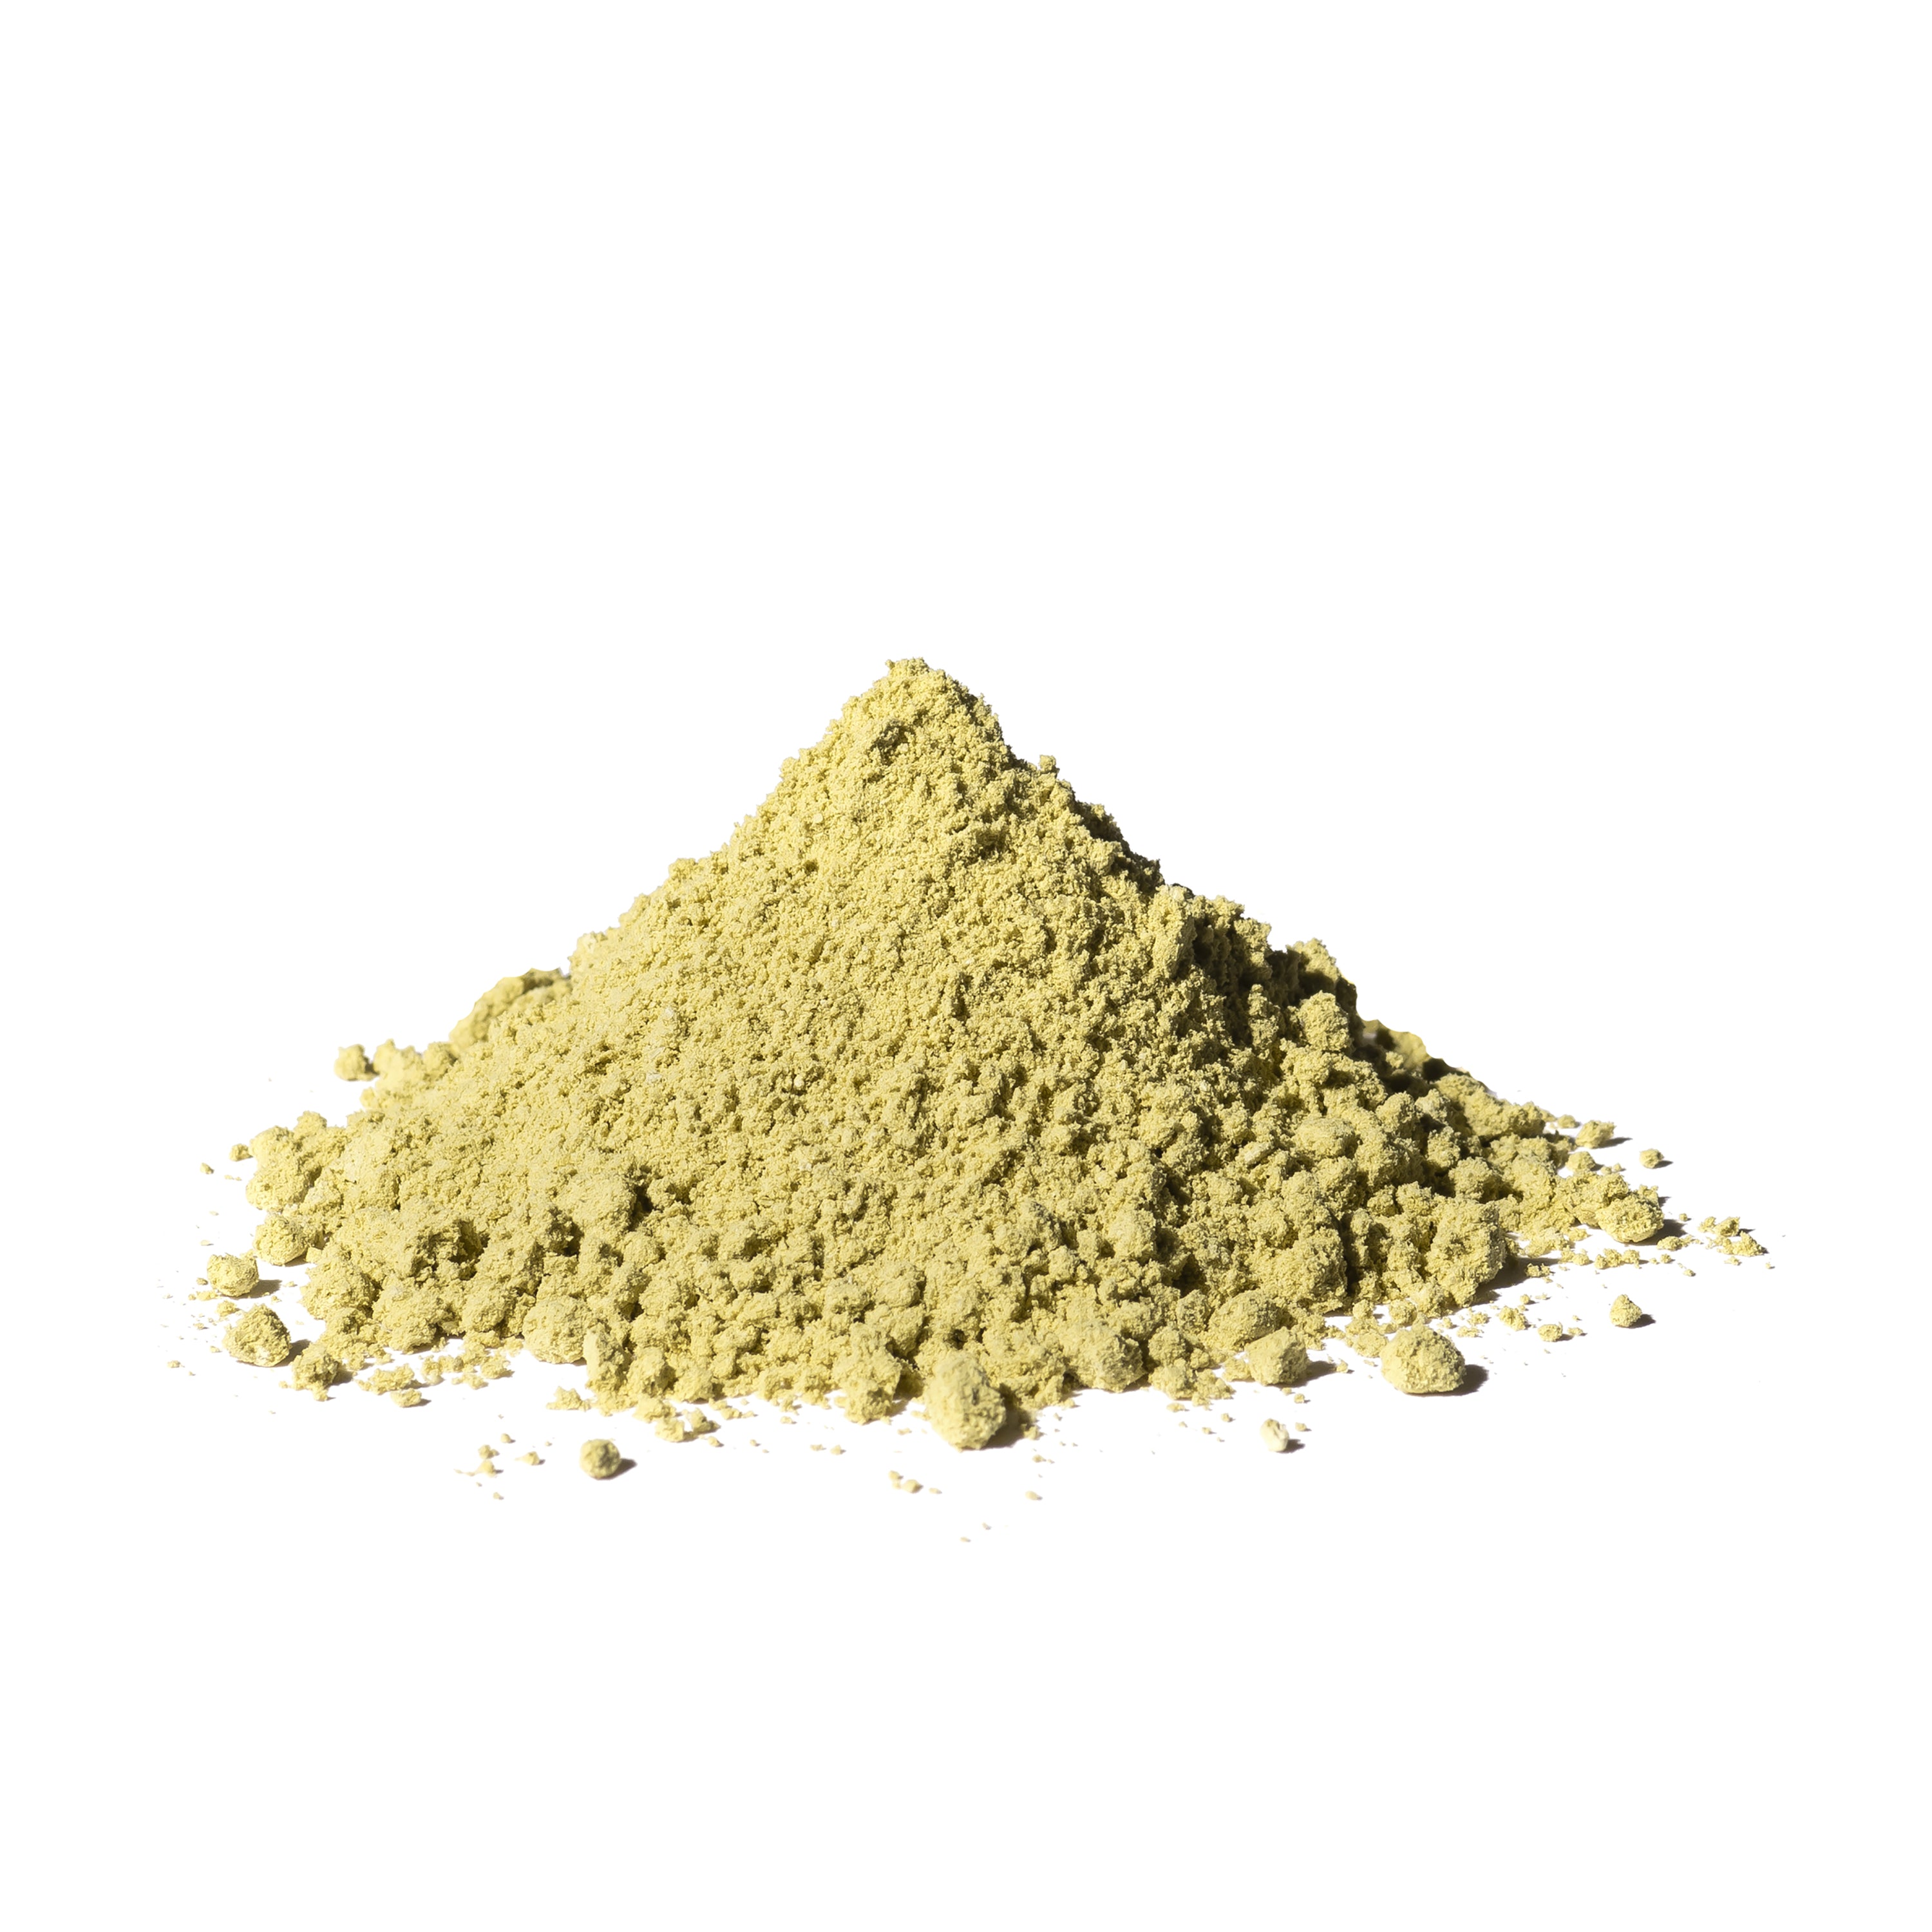 Rice bran and matcha powder